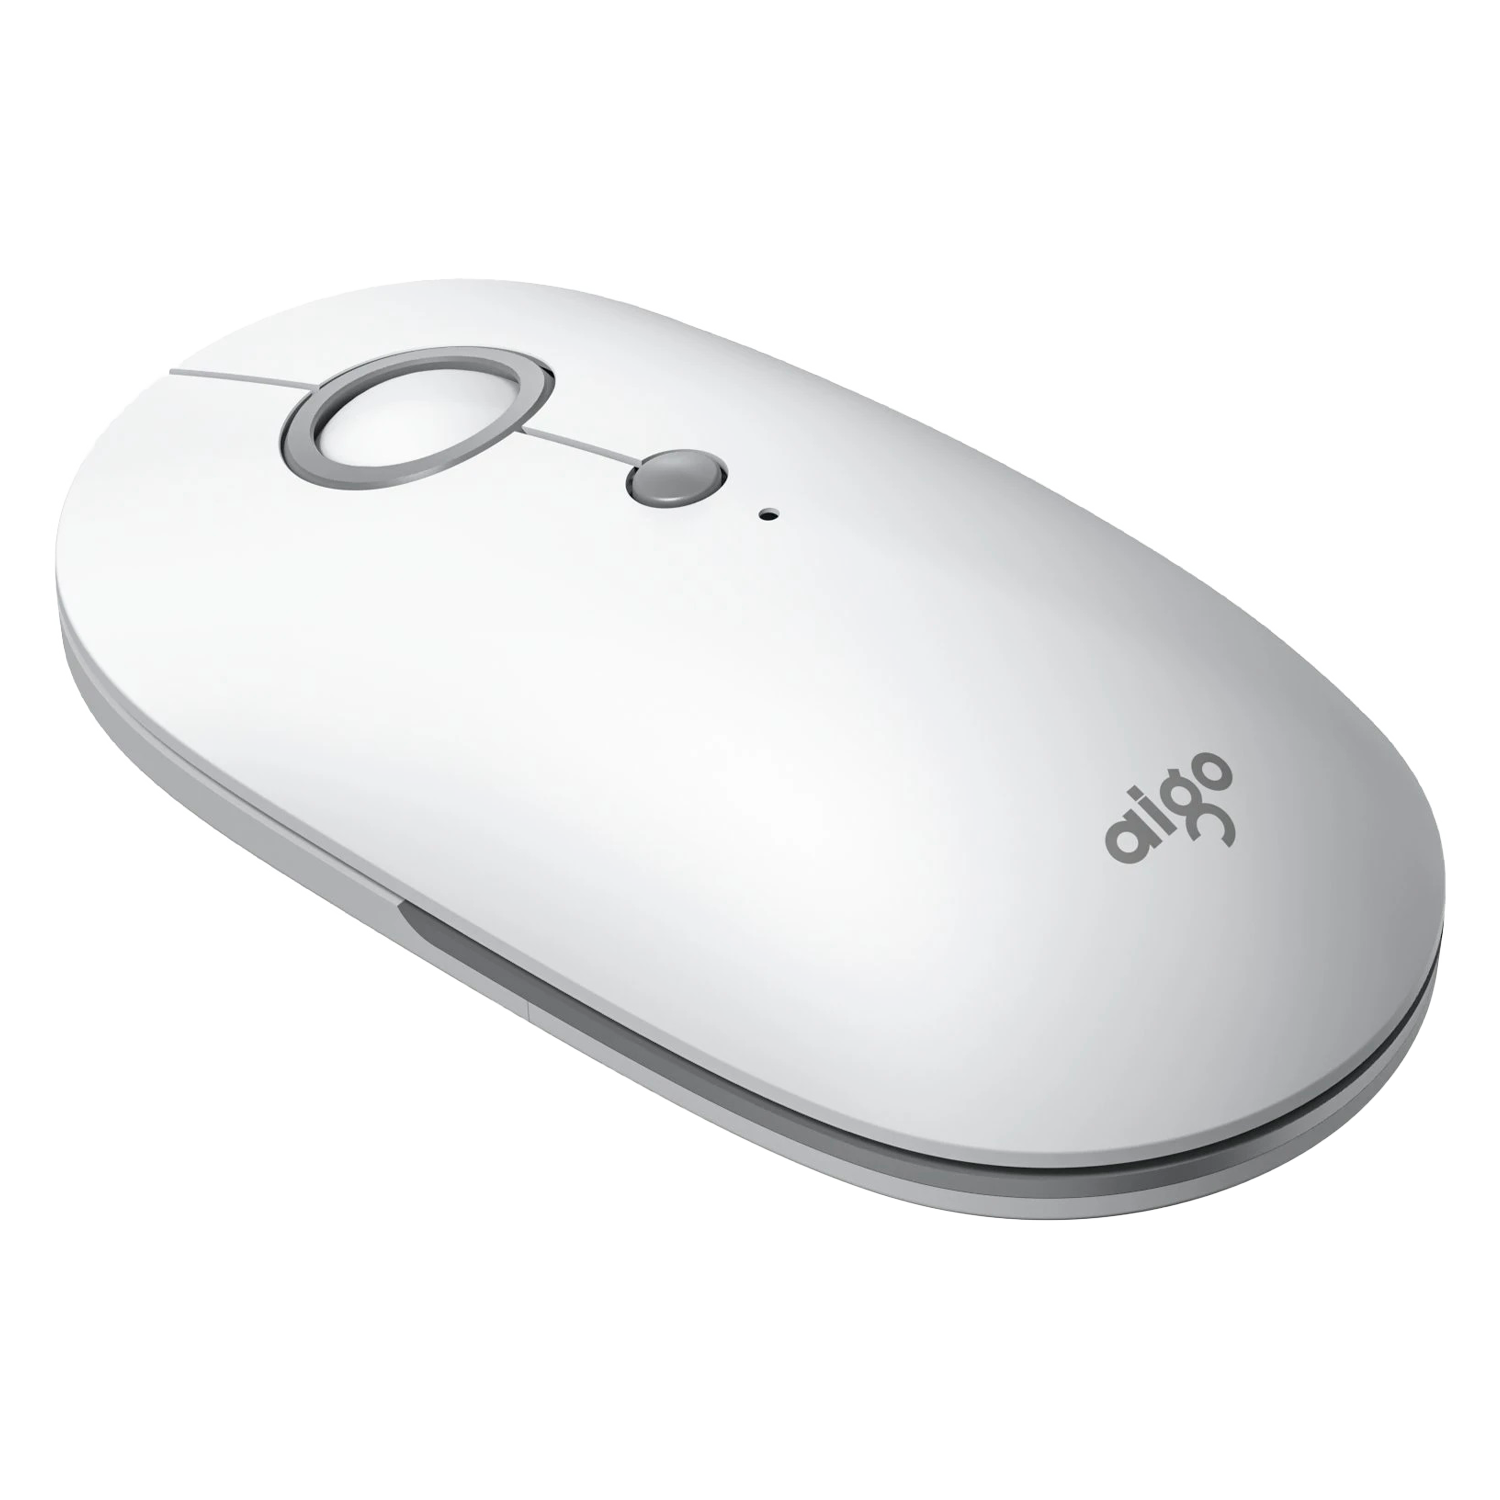 Mouse Aigo M300 Wireless - Branco